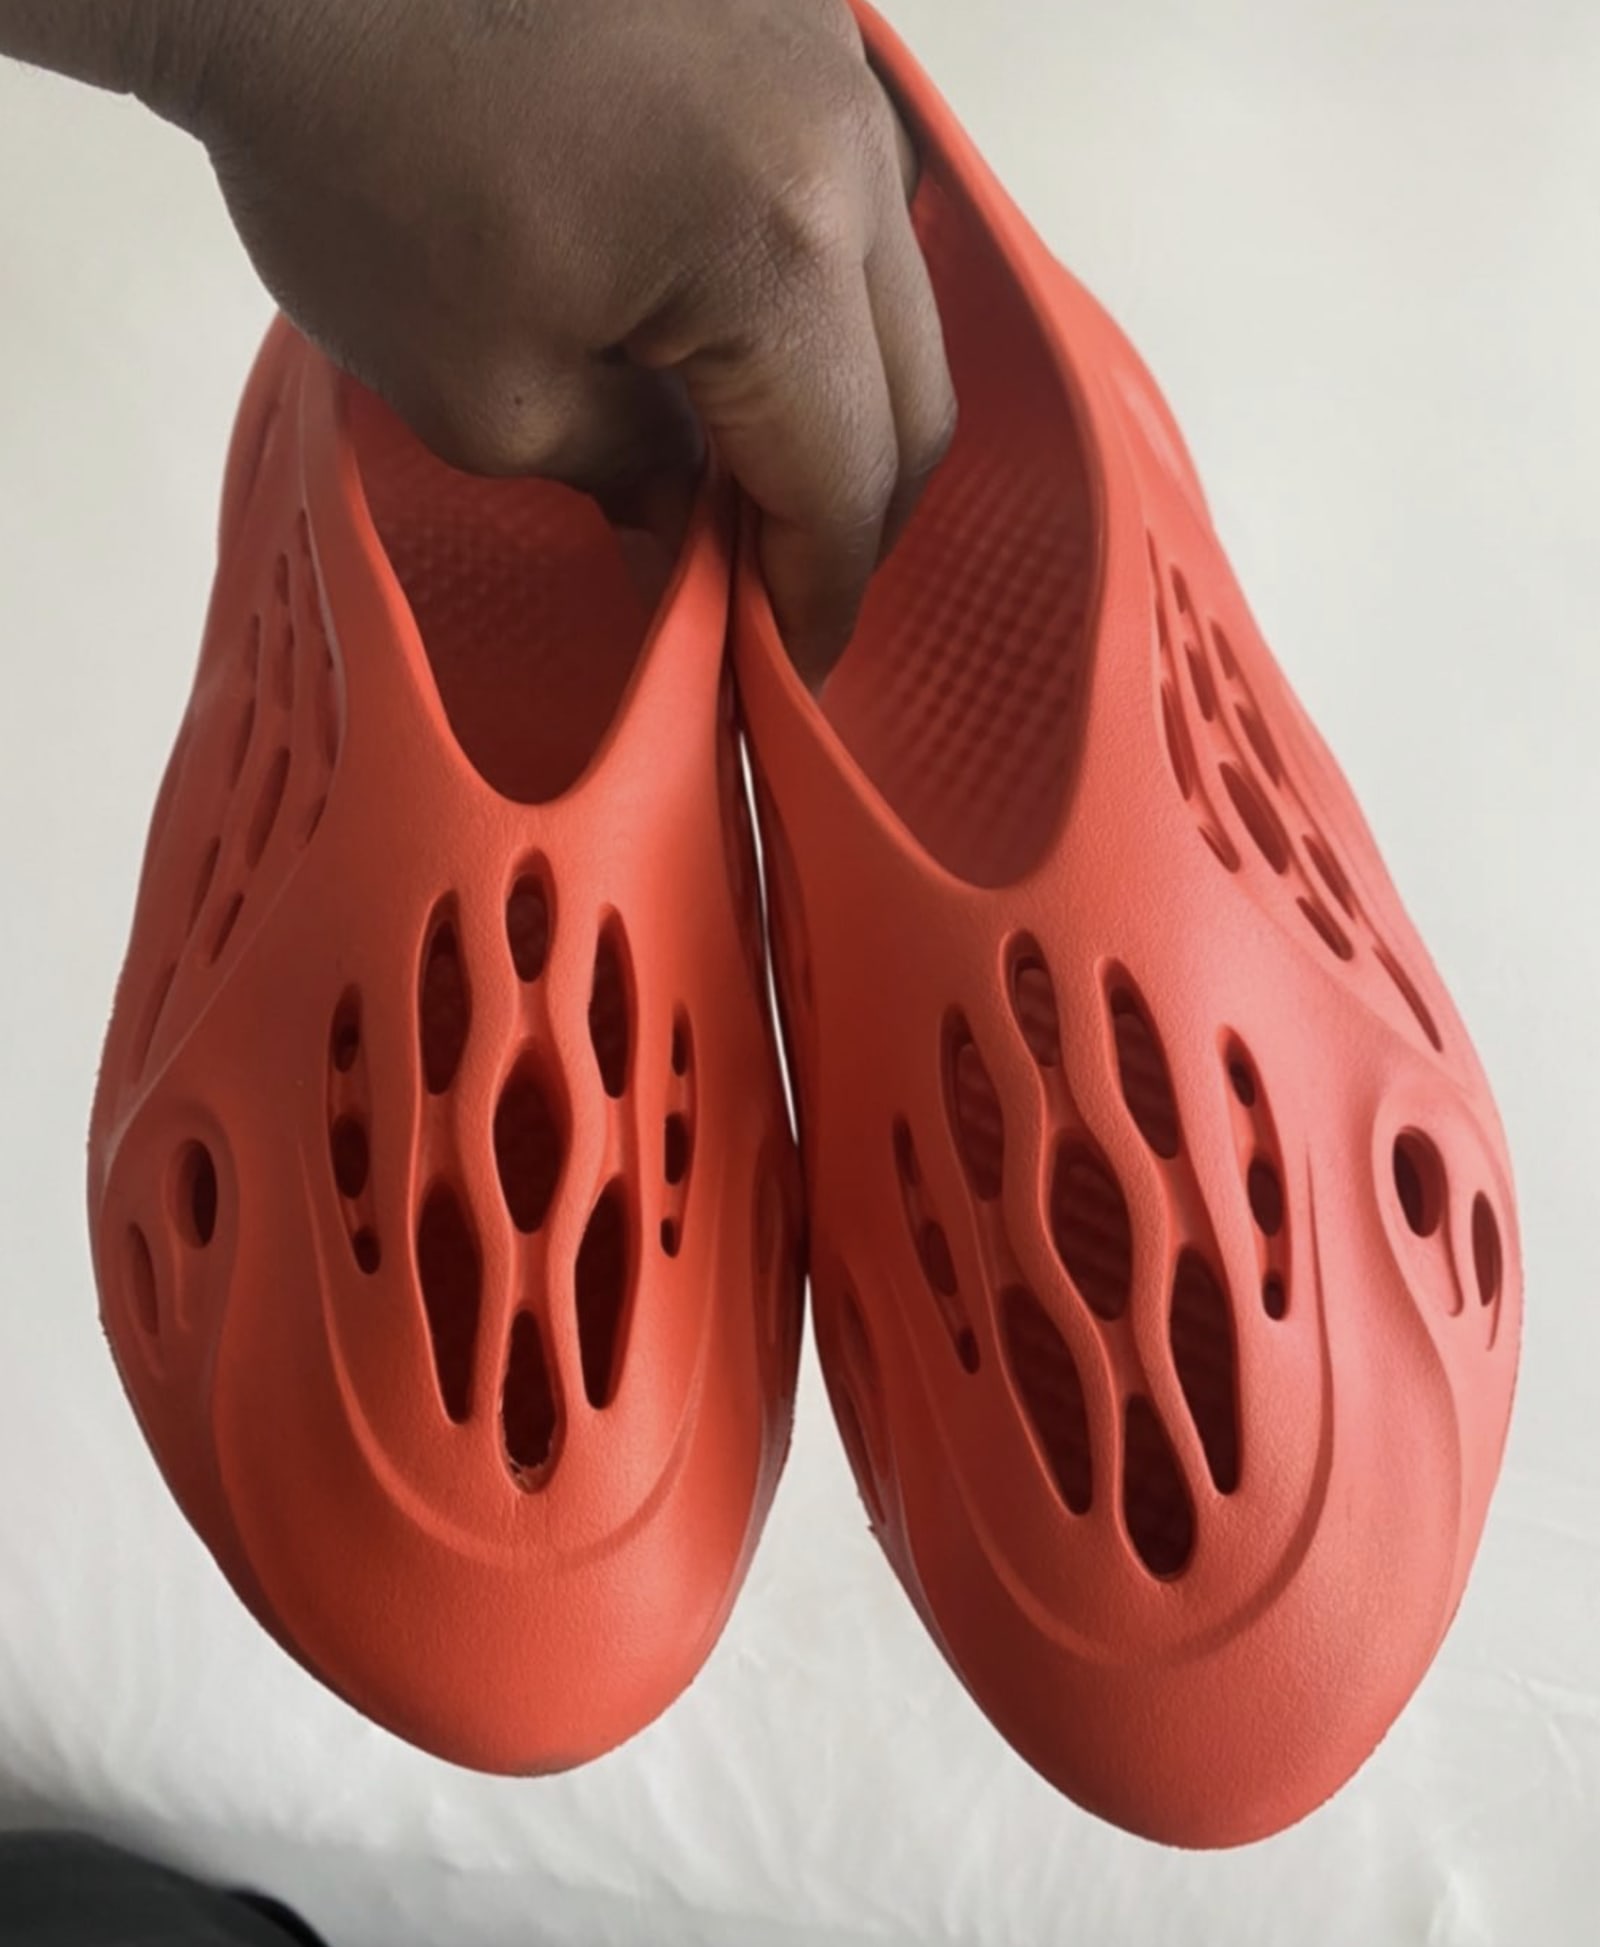 Adidas Yeezy Foam Runner Receives "Red October" Makeover